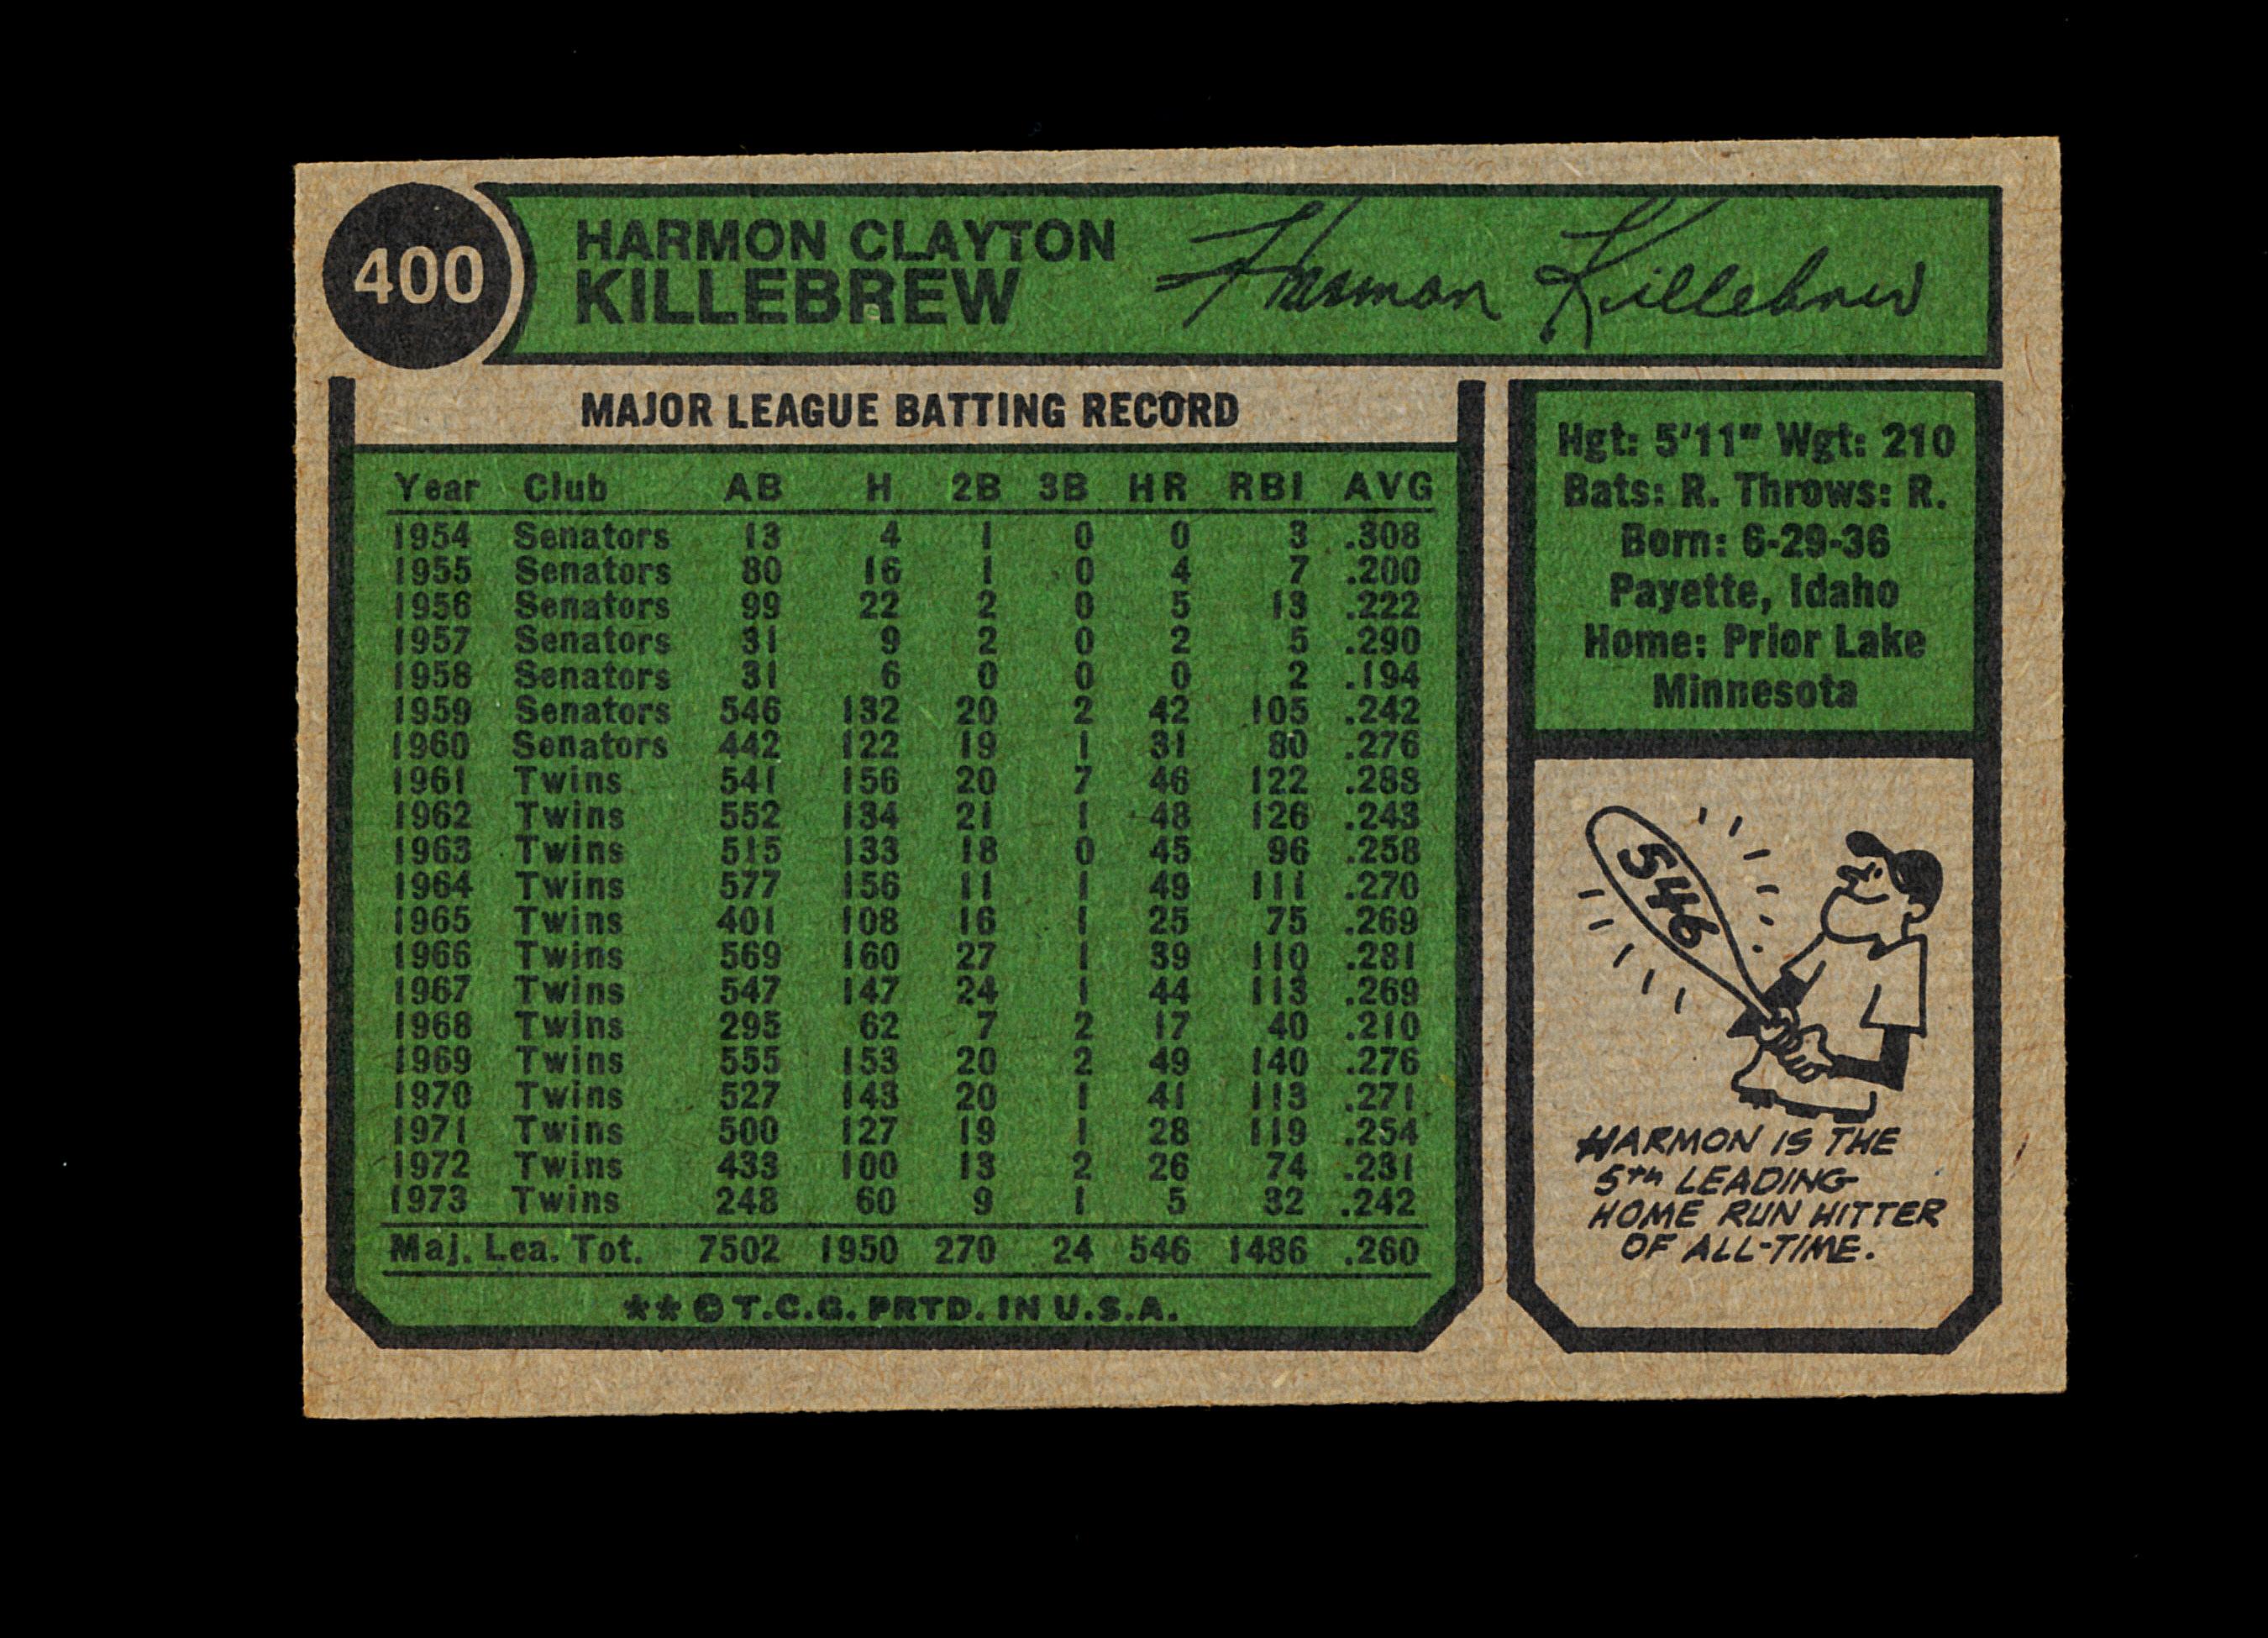 1974 Topps Baseball Card #400 Hall of Famer Harmon Killebrew Minnesota Twin